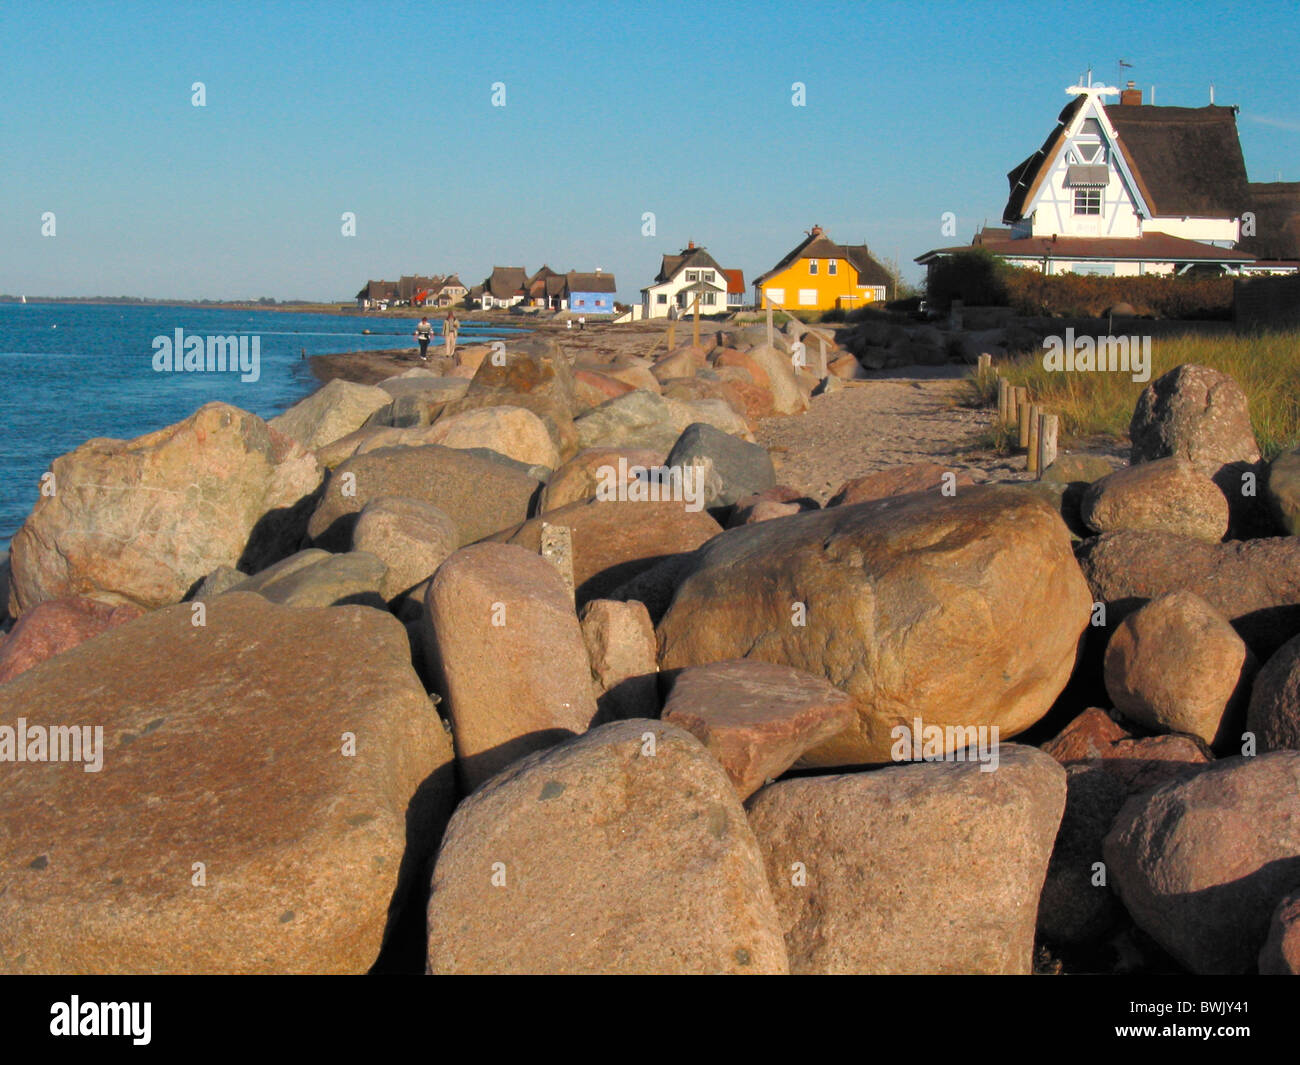 houses homes single-family dwellings Graswarder Heiligenhafen coast Baltic coast Binnensee Baltic Sea Schleswi Stock Photo